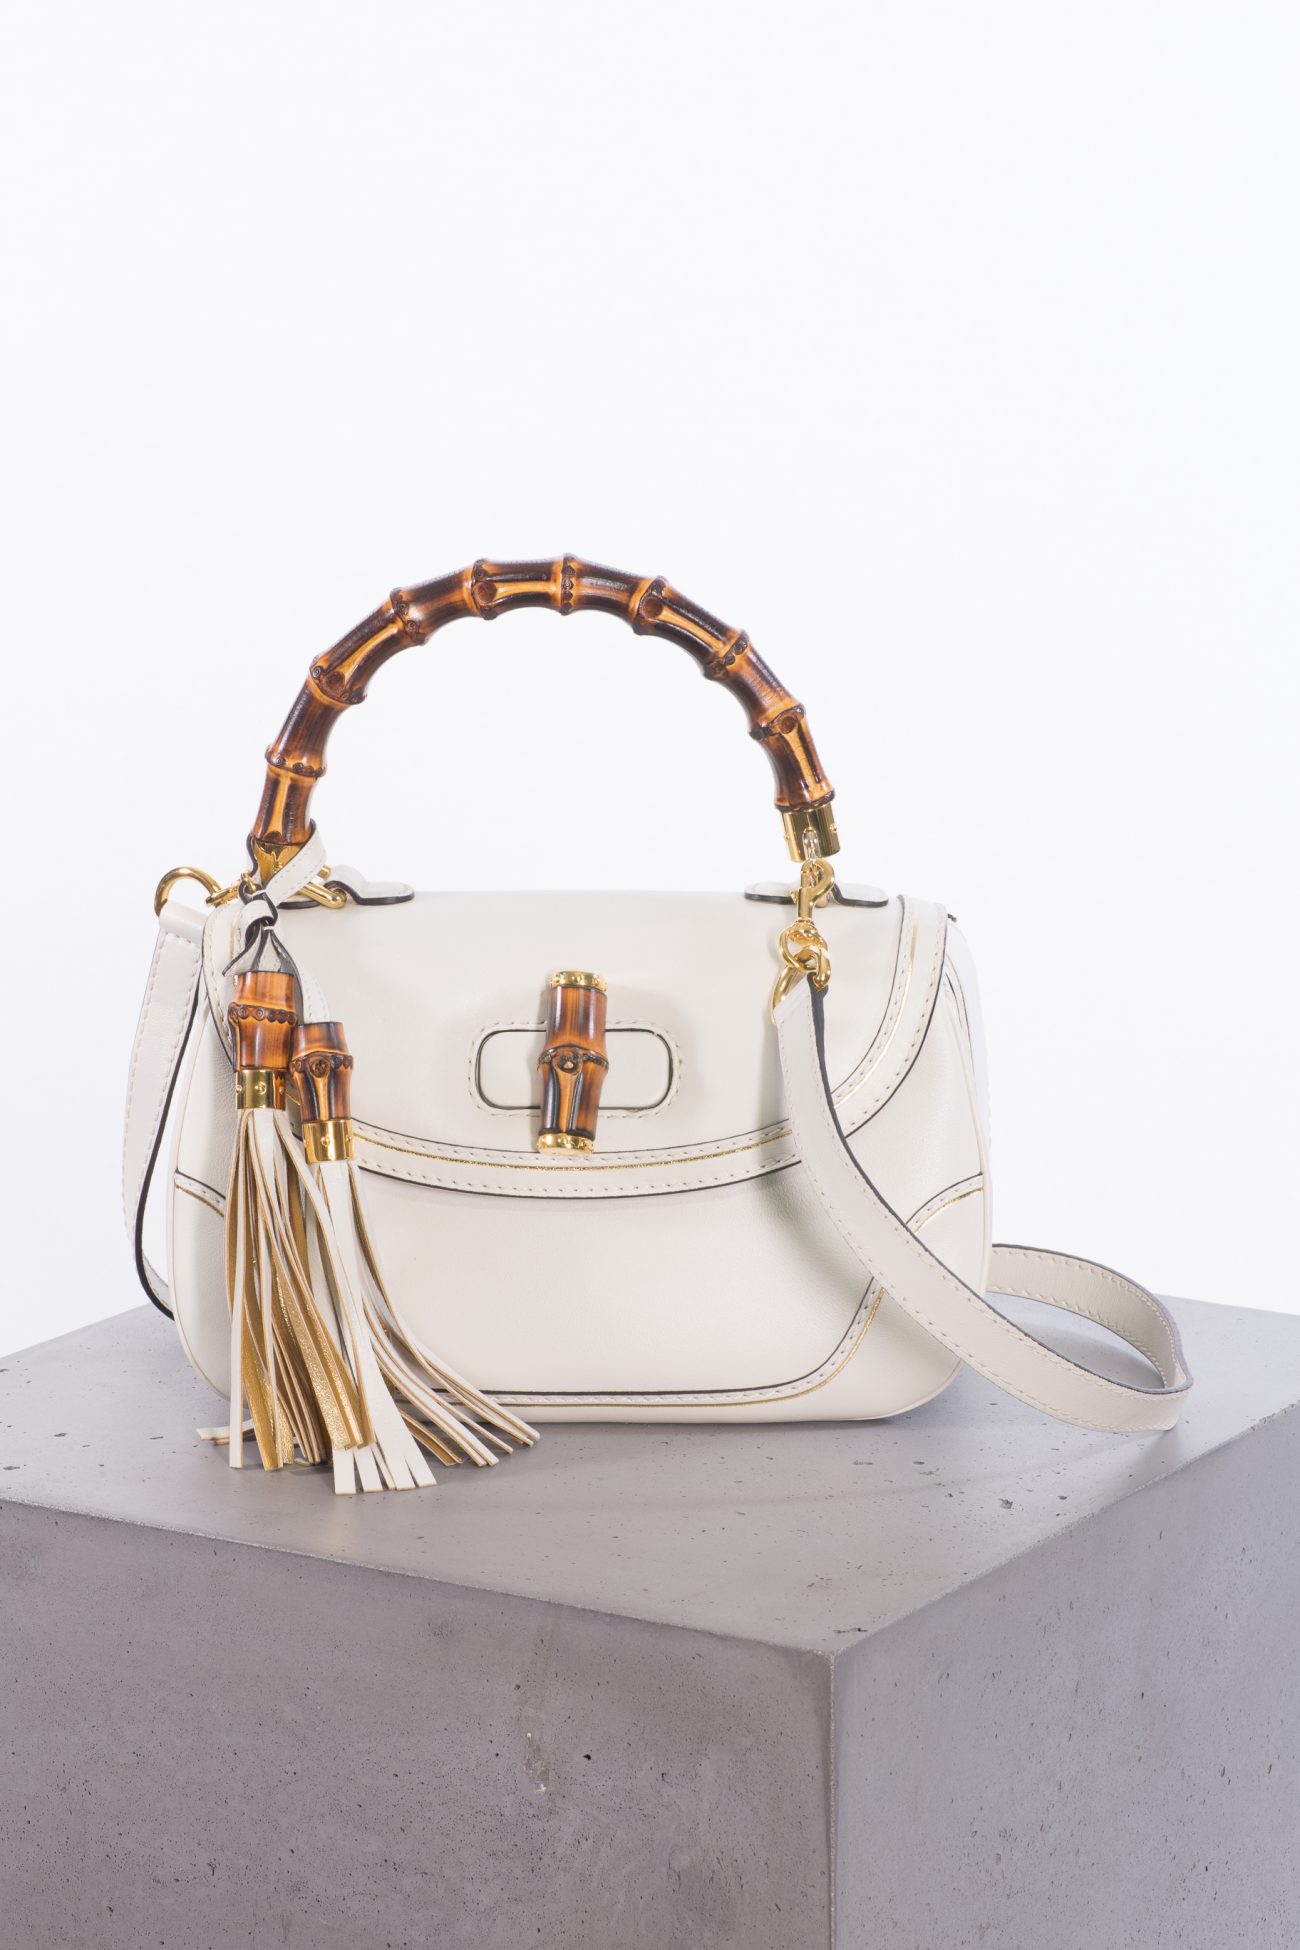 Chanel Bag - Huntessa Luxury Online Consignment Boutique